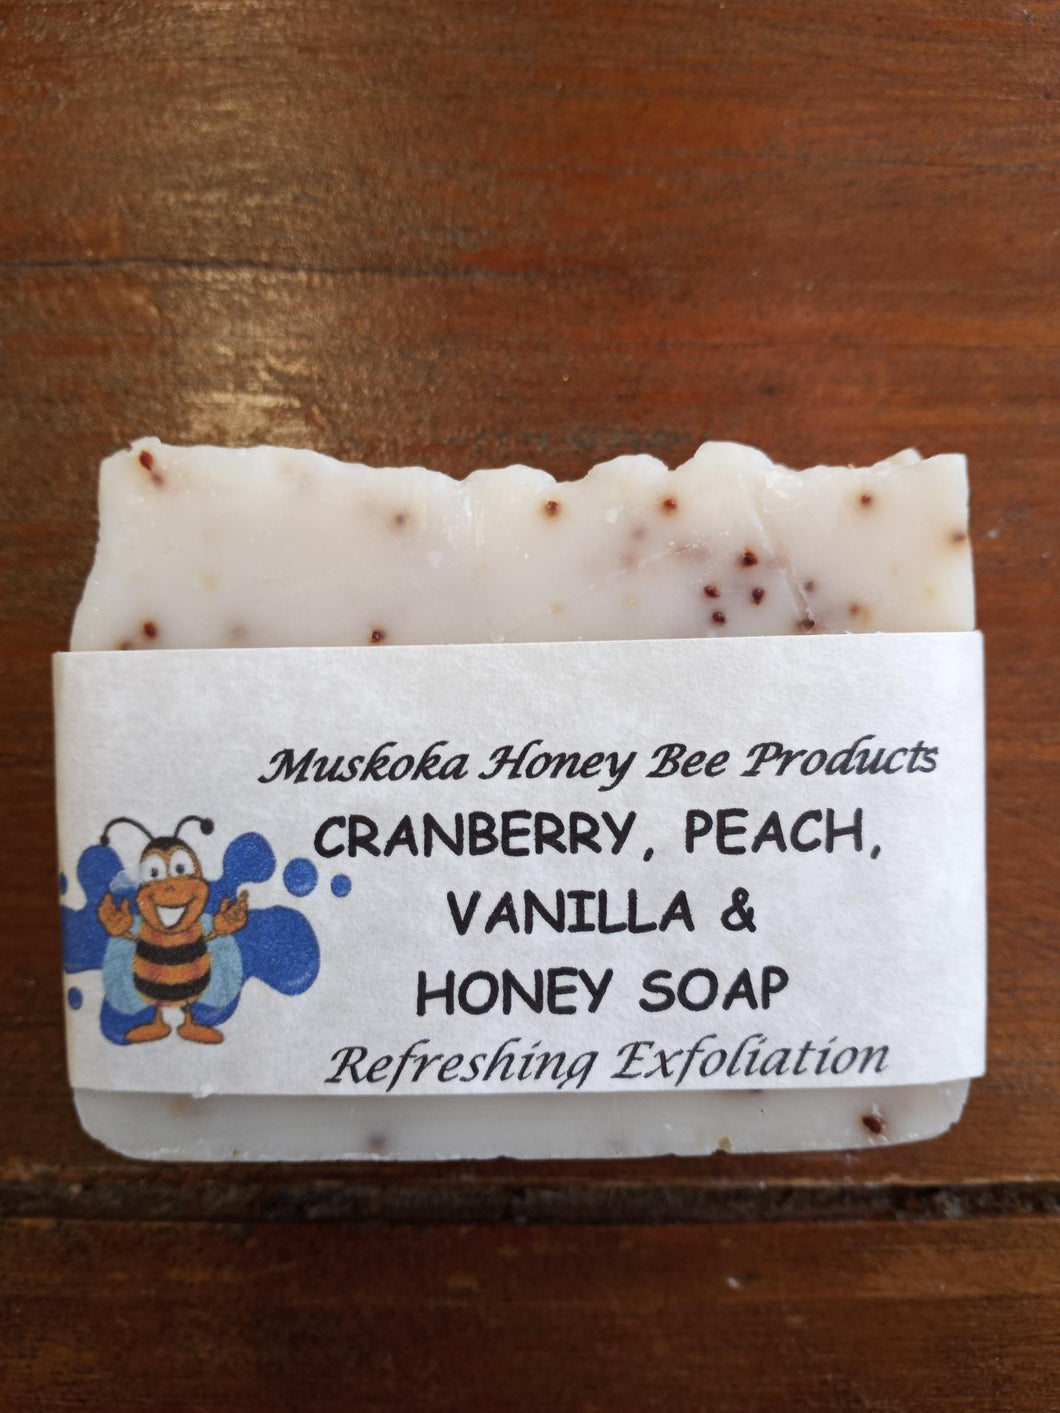 Cranberry, Peach, Vanilla & Honey Soap